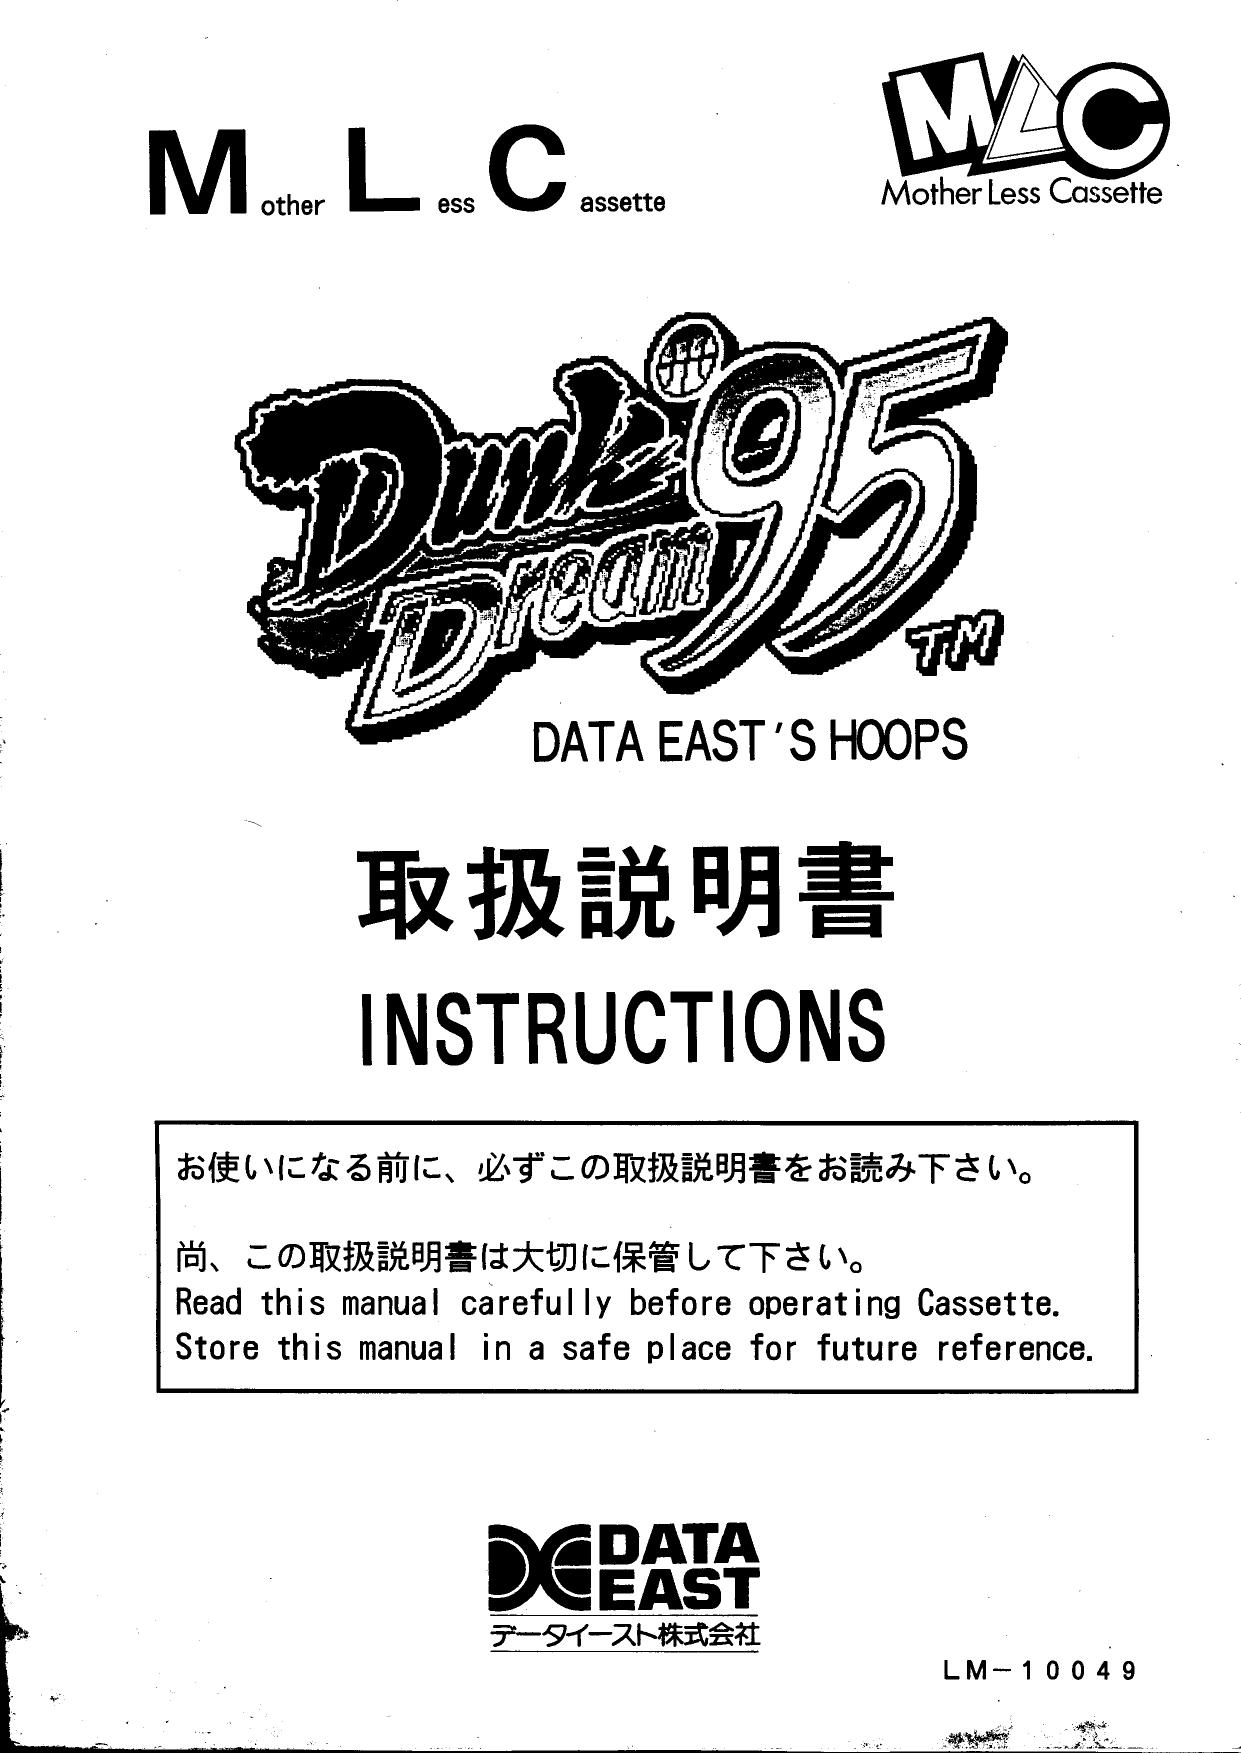 Dunk Dream 95 (Instructions) (J)